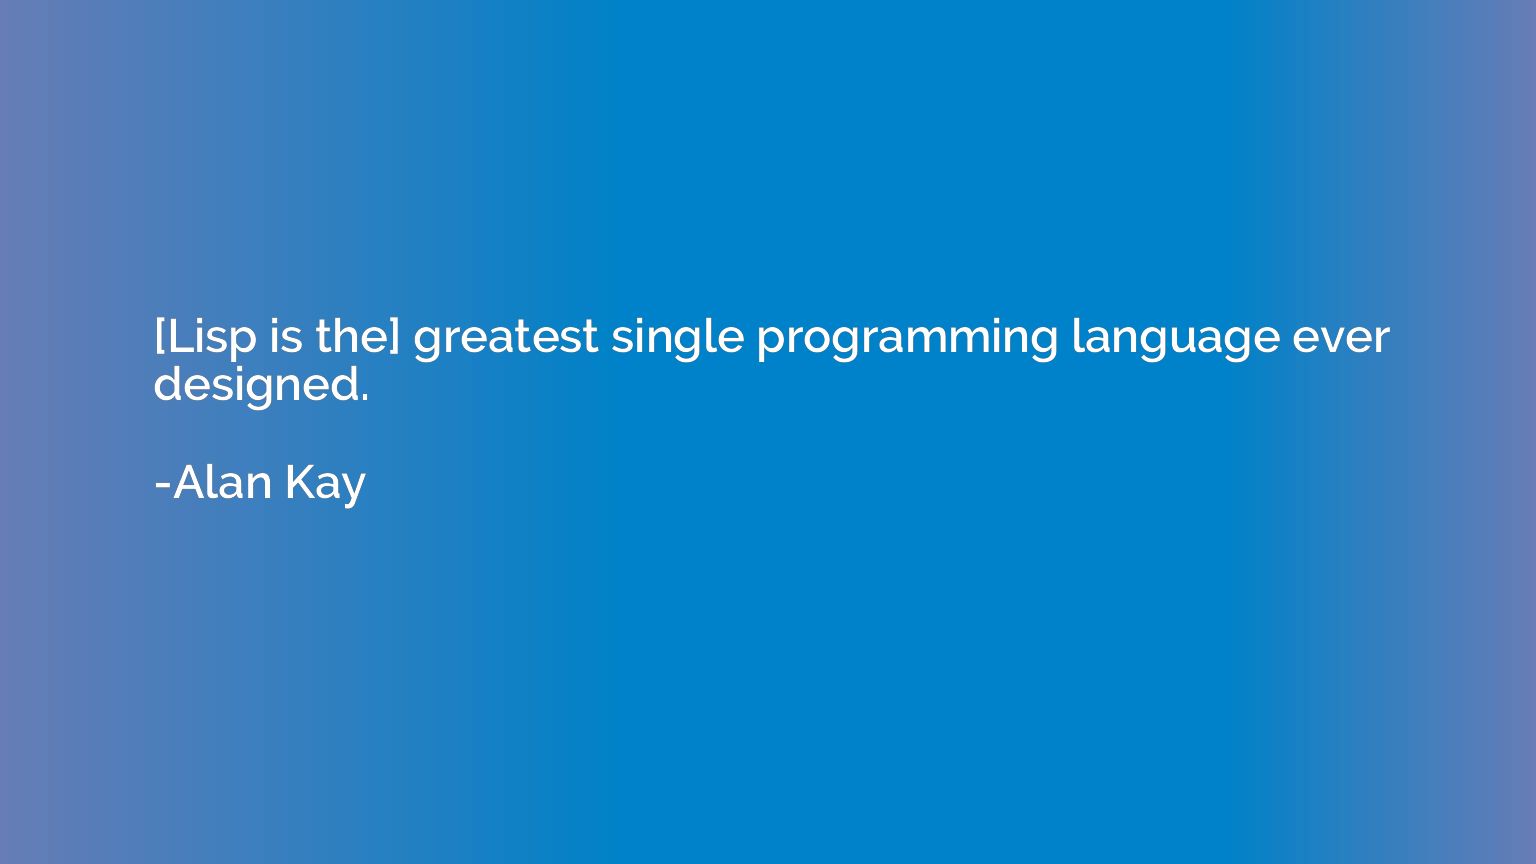 [Lisp is the] greatest single programming language ever desi